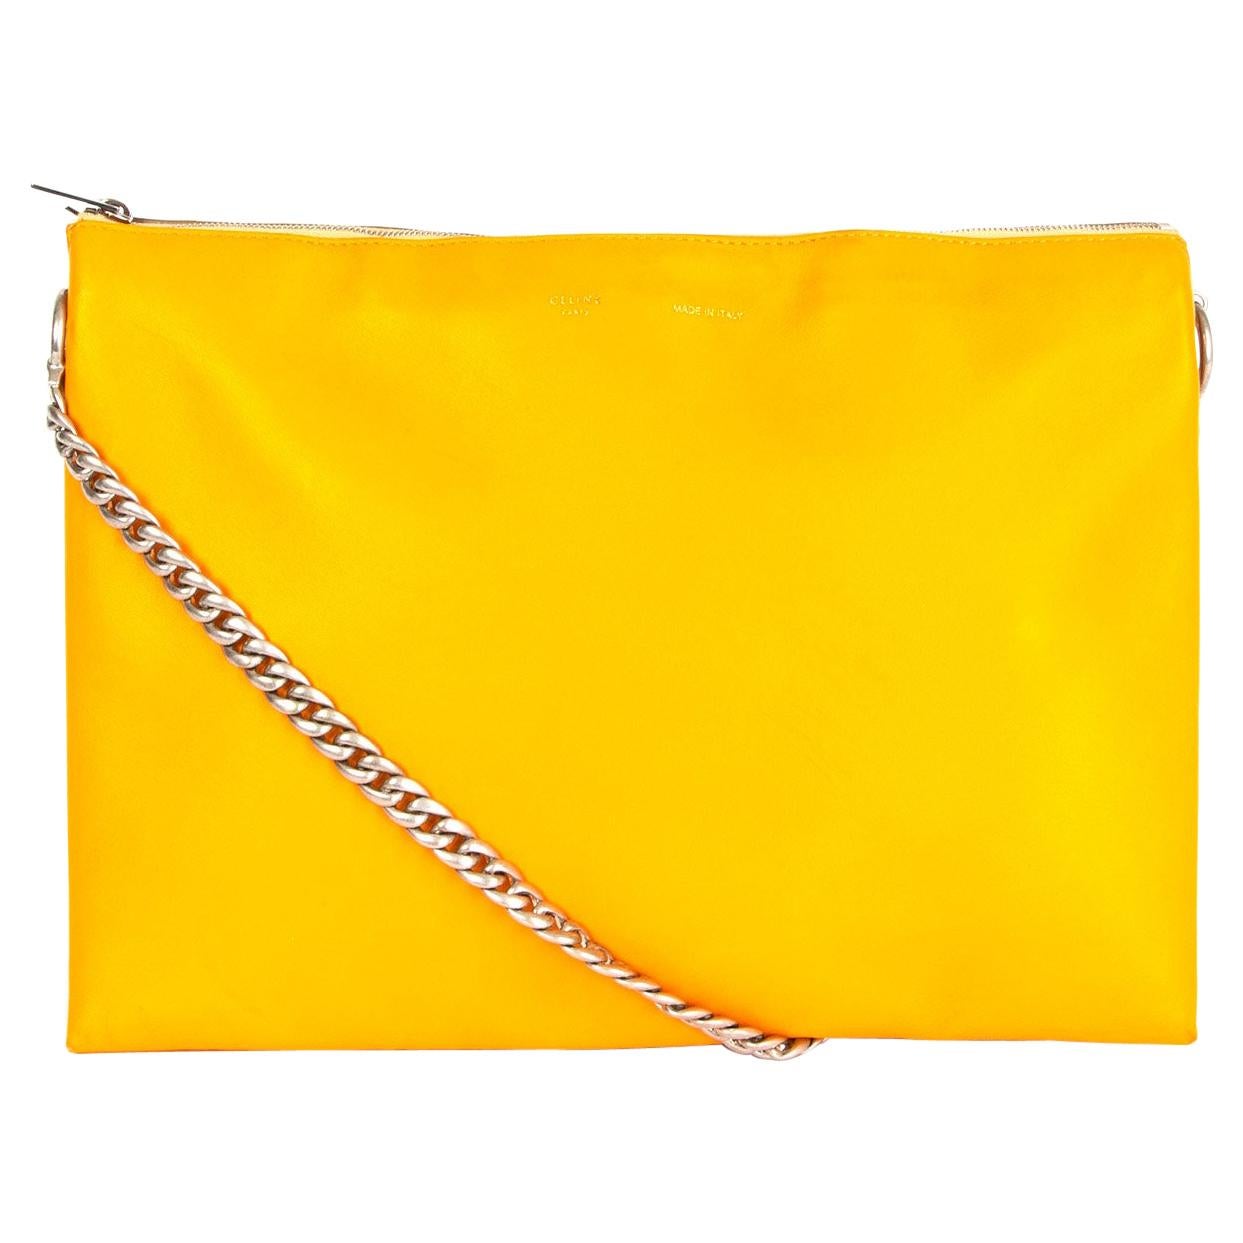 CELINE orange yellow leather TRICOLOR TRIO CHAIN Clutch Shoulder Bag